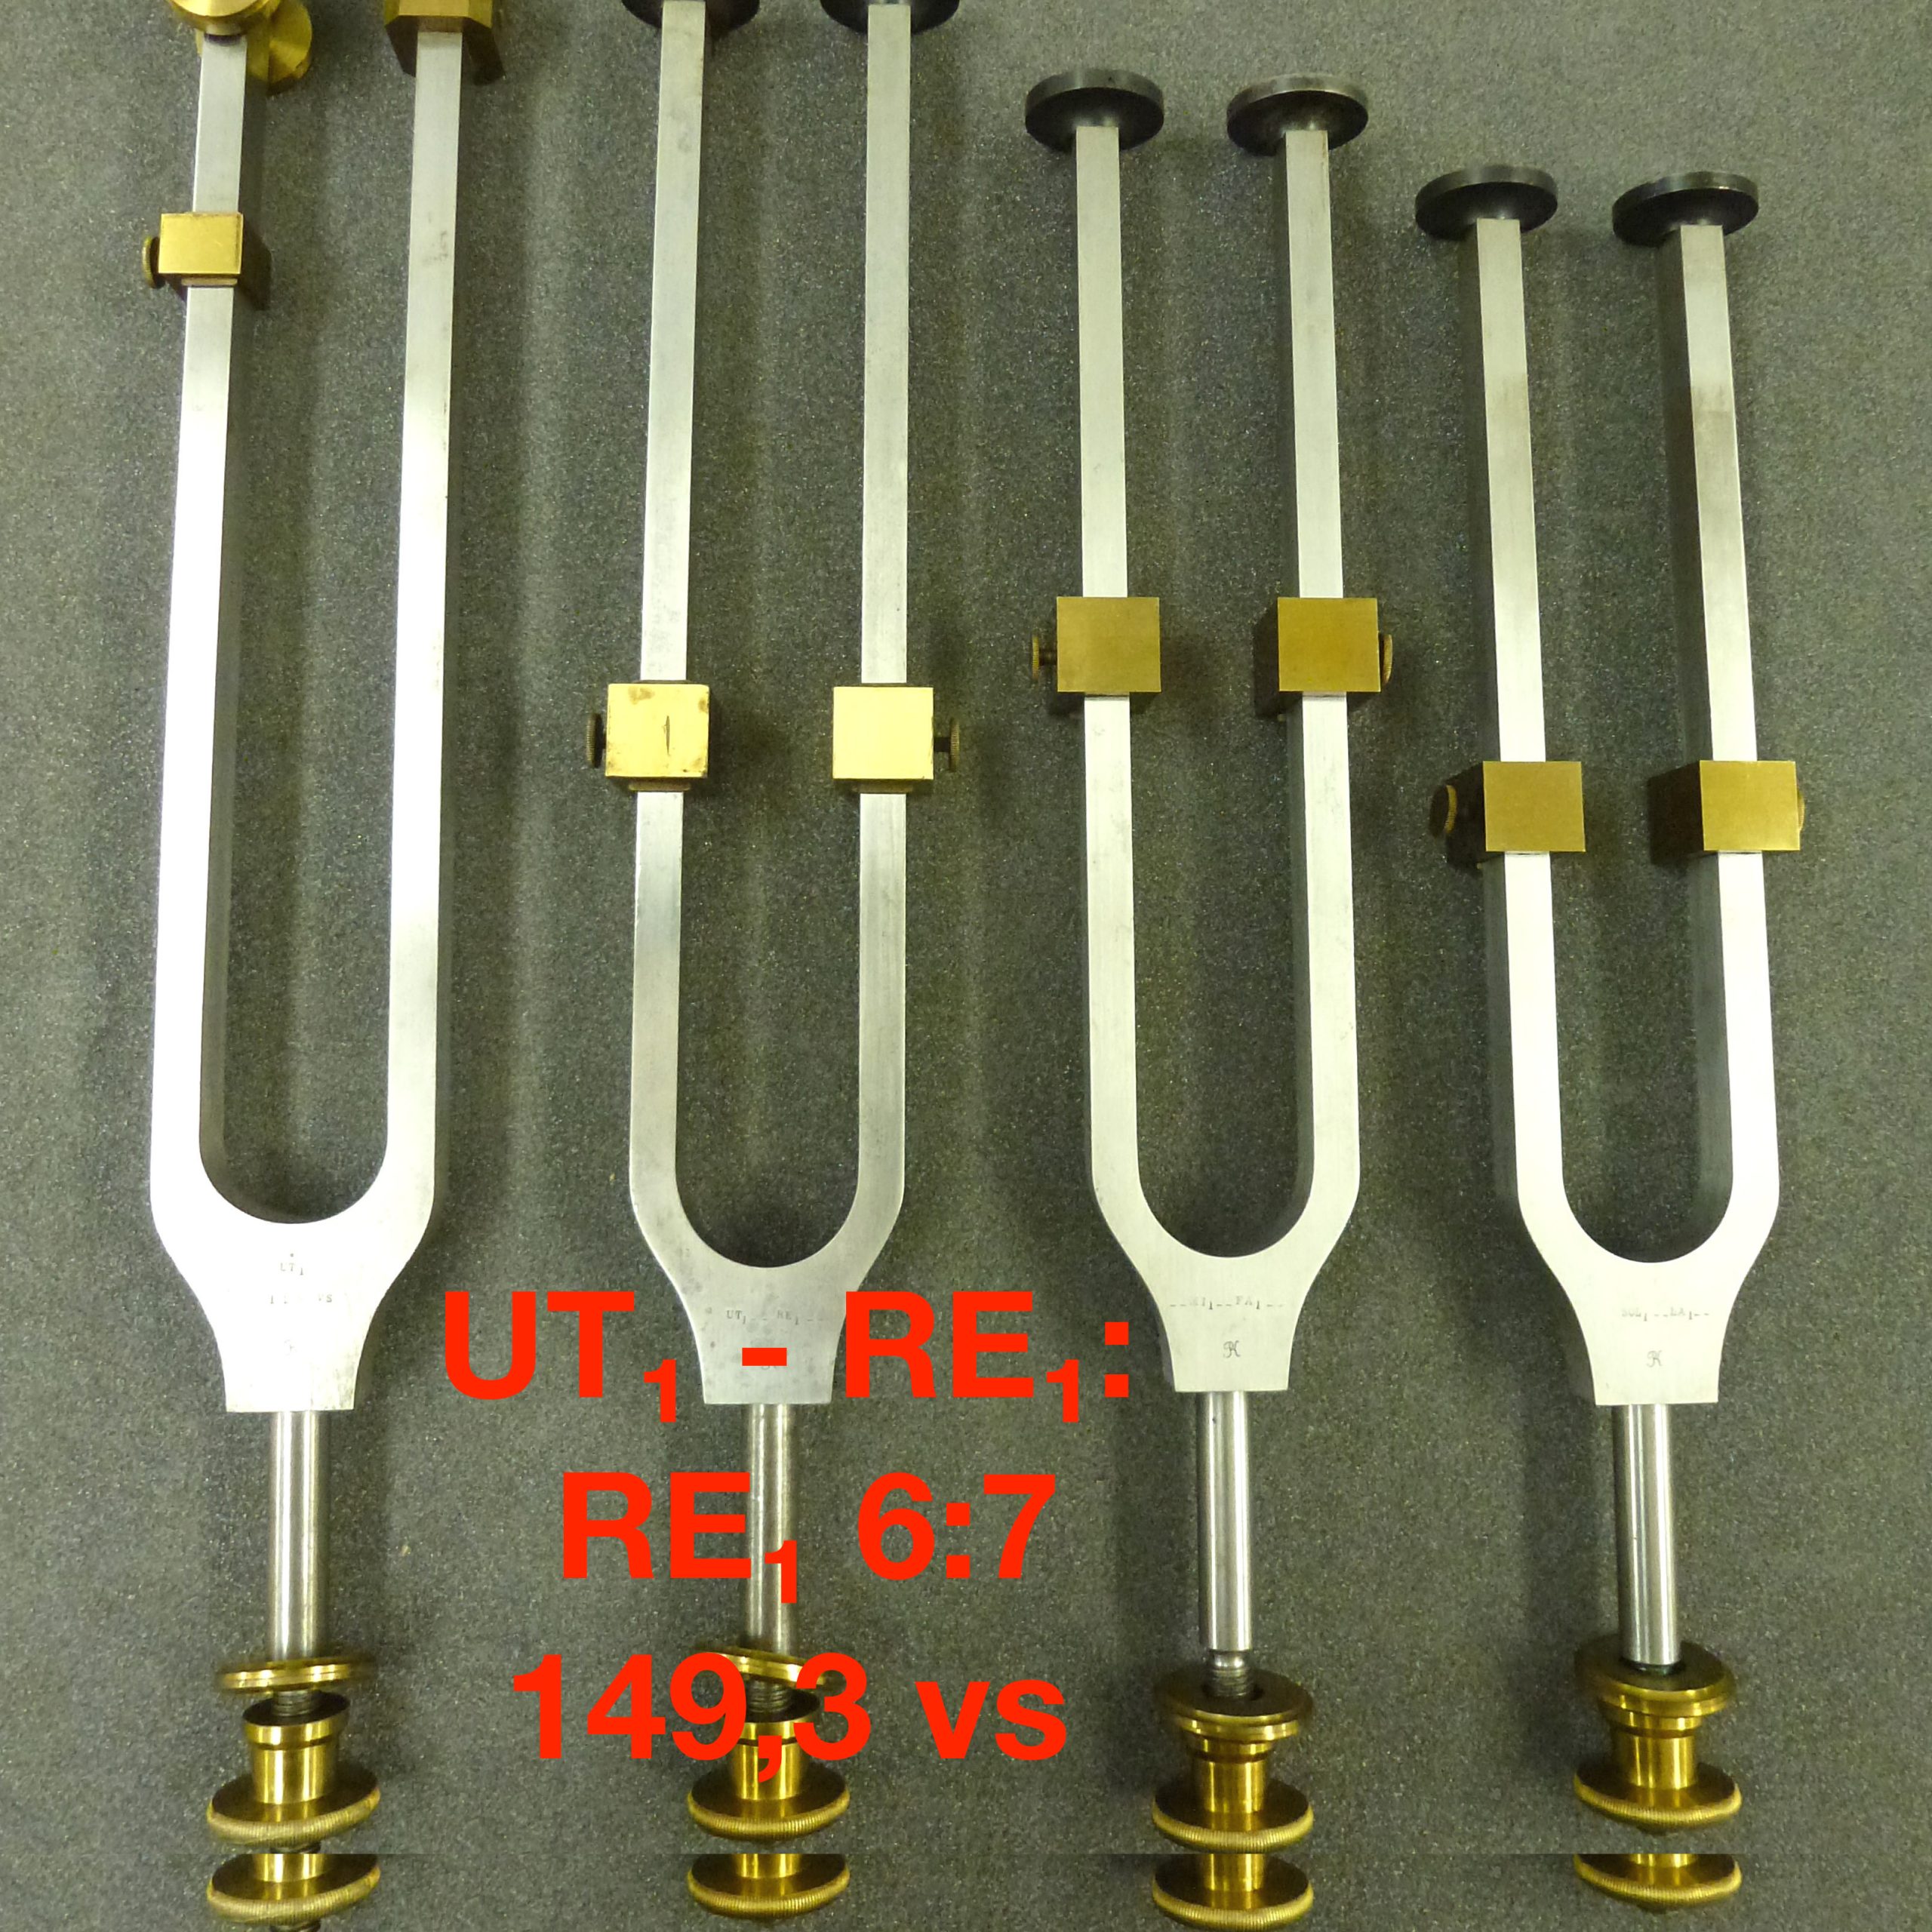 Tuning fork by Dr. R. Koenig: UT₁ - RE₁: RE₁ 6:7